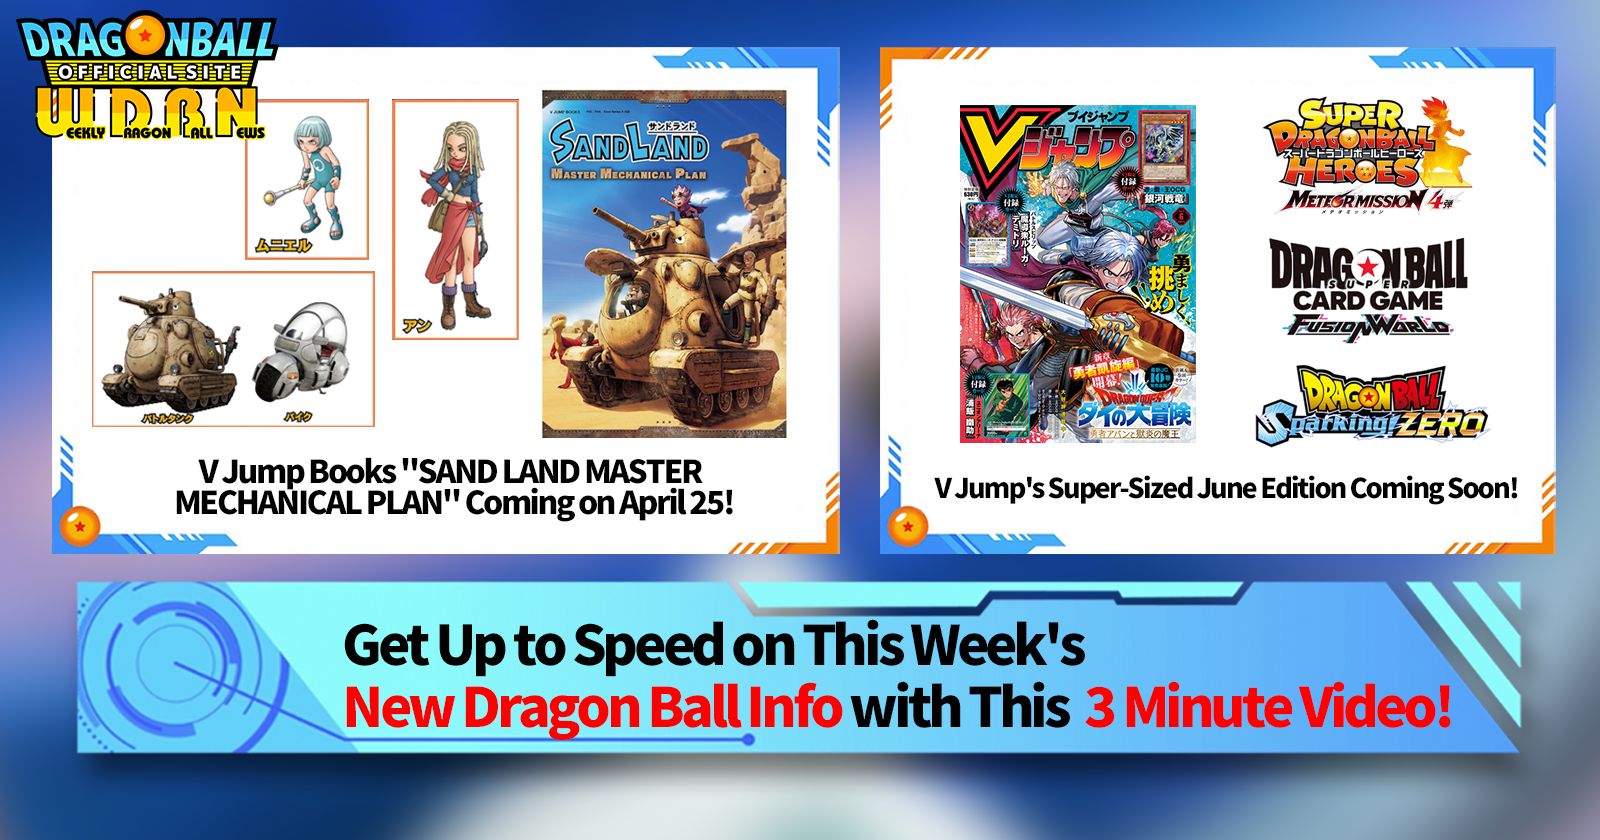 [April 15th] Weekly Dragon Ball News Broadcast!